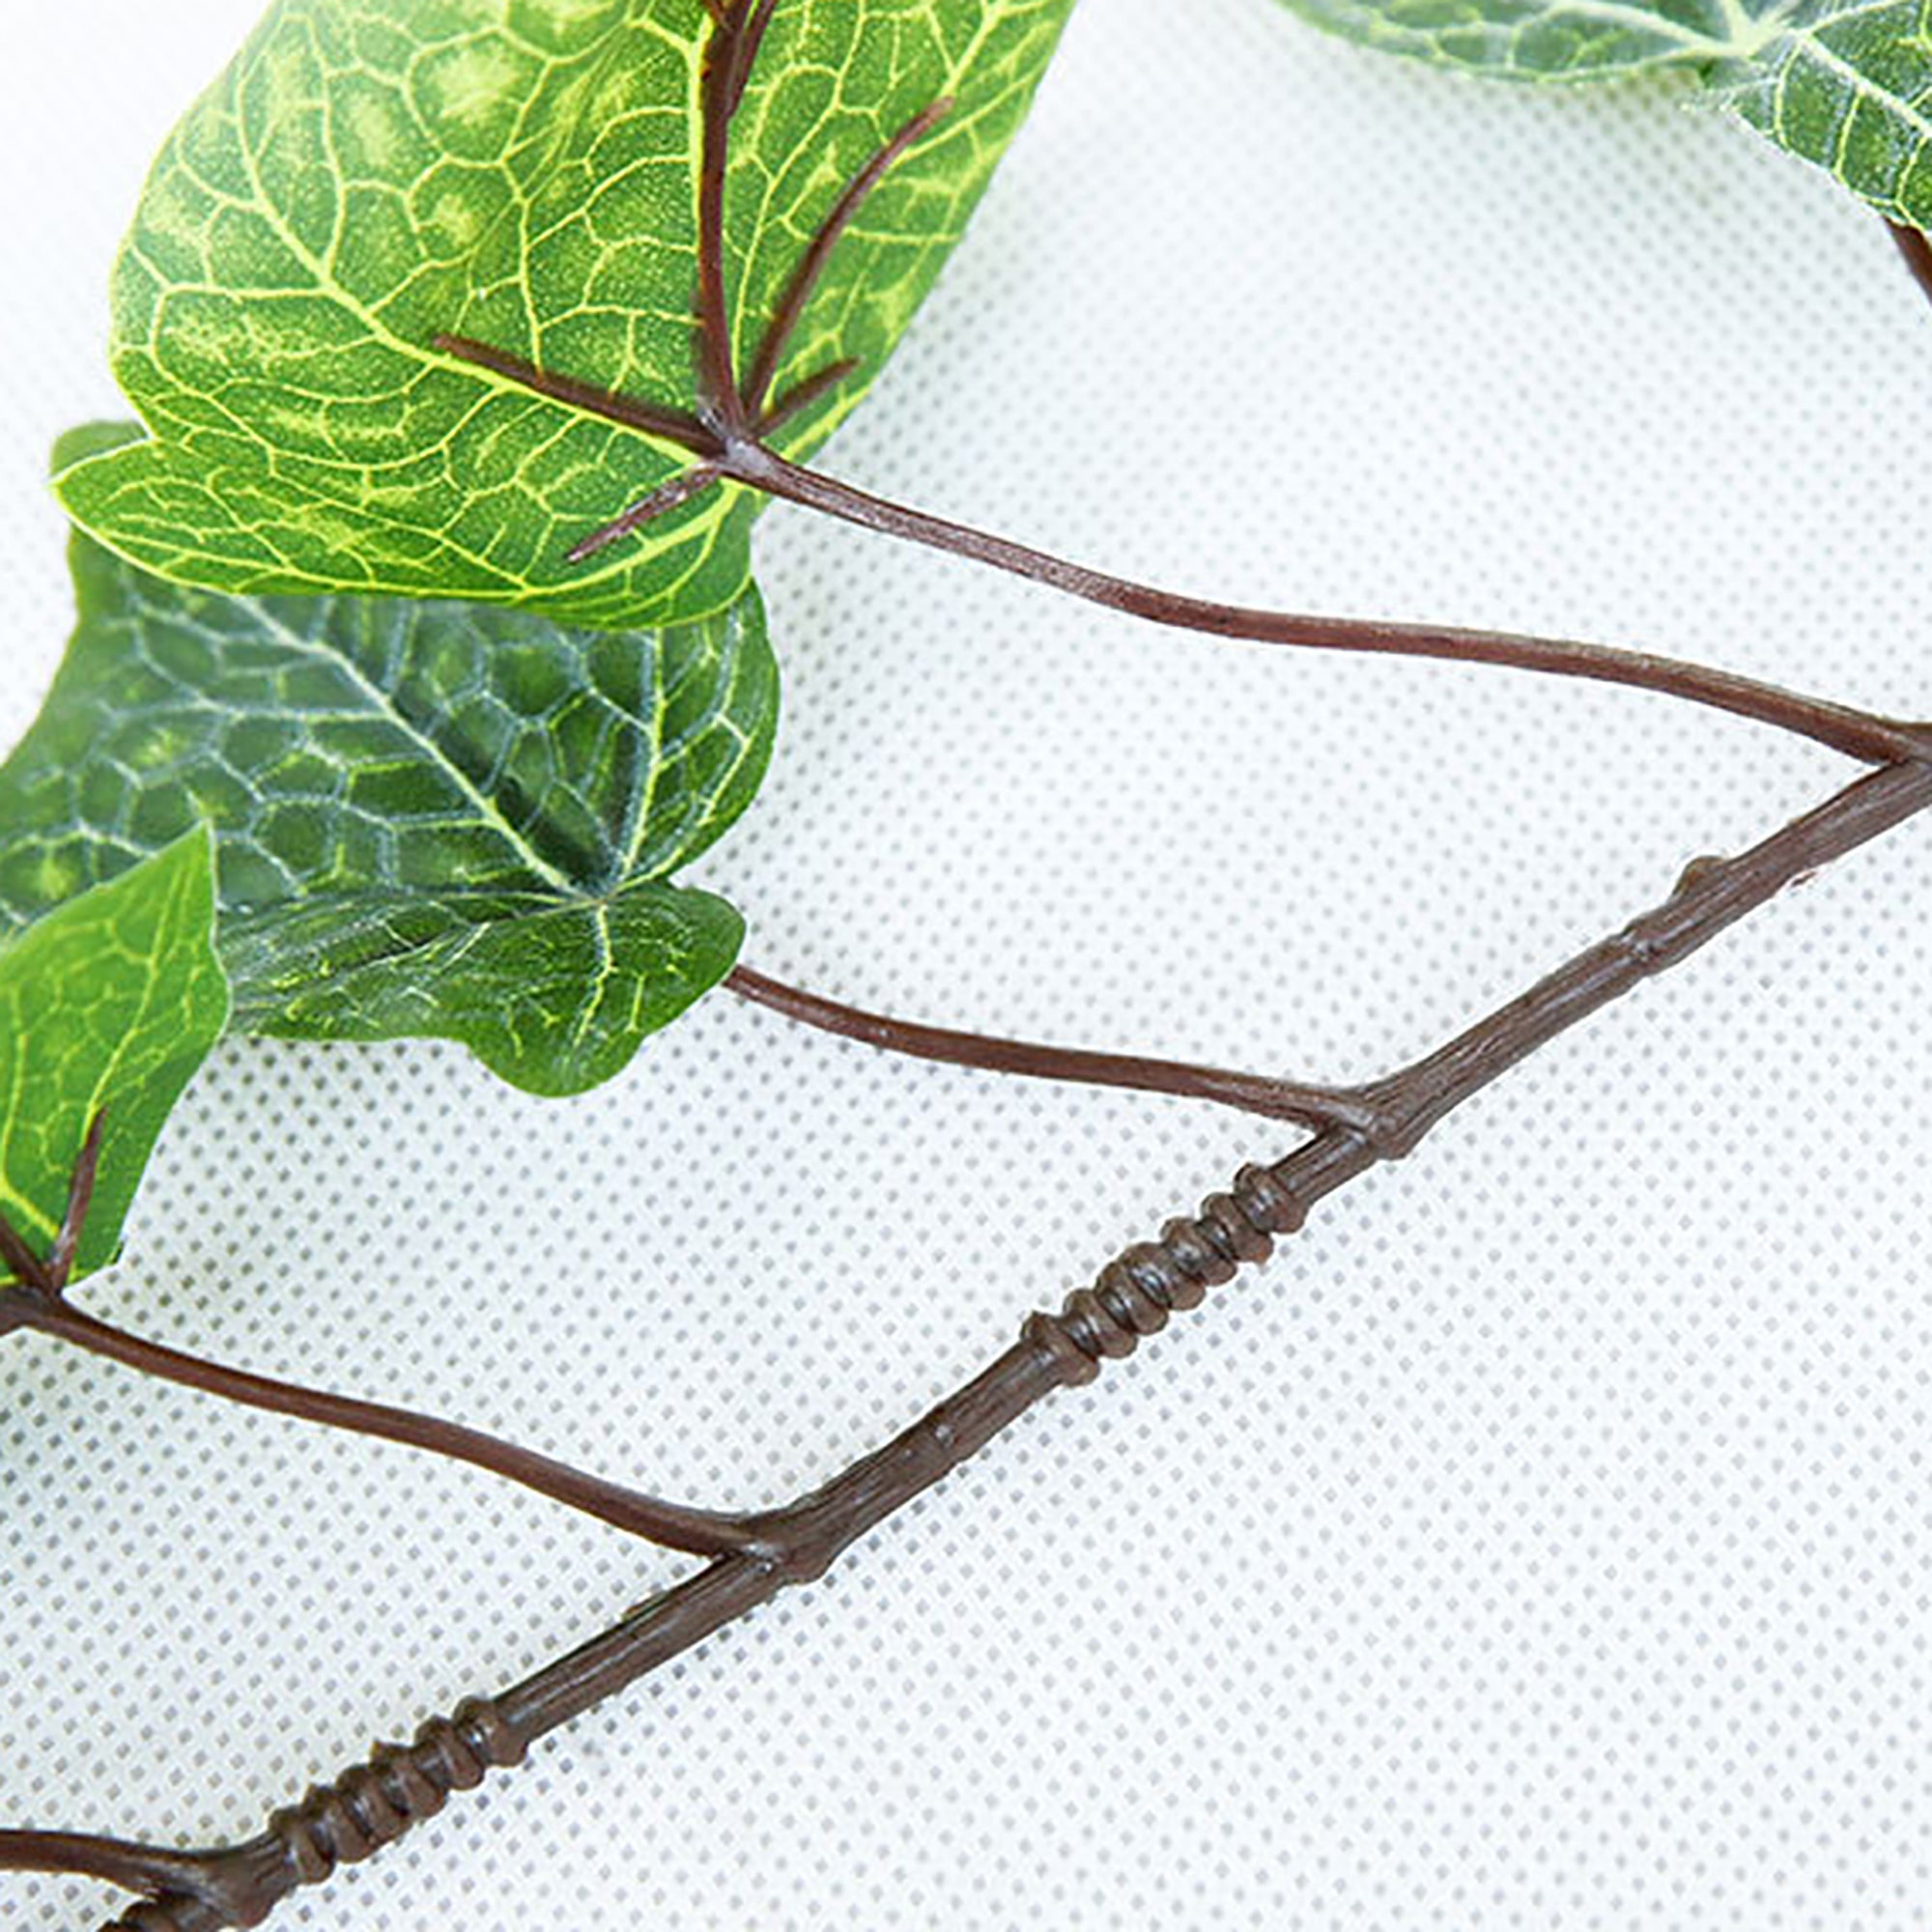 Artificial Ivy Garland Vines Hanging Plants